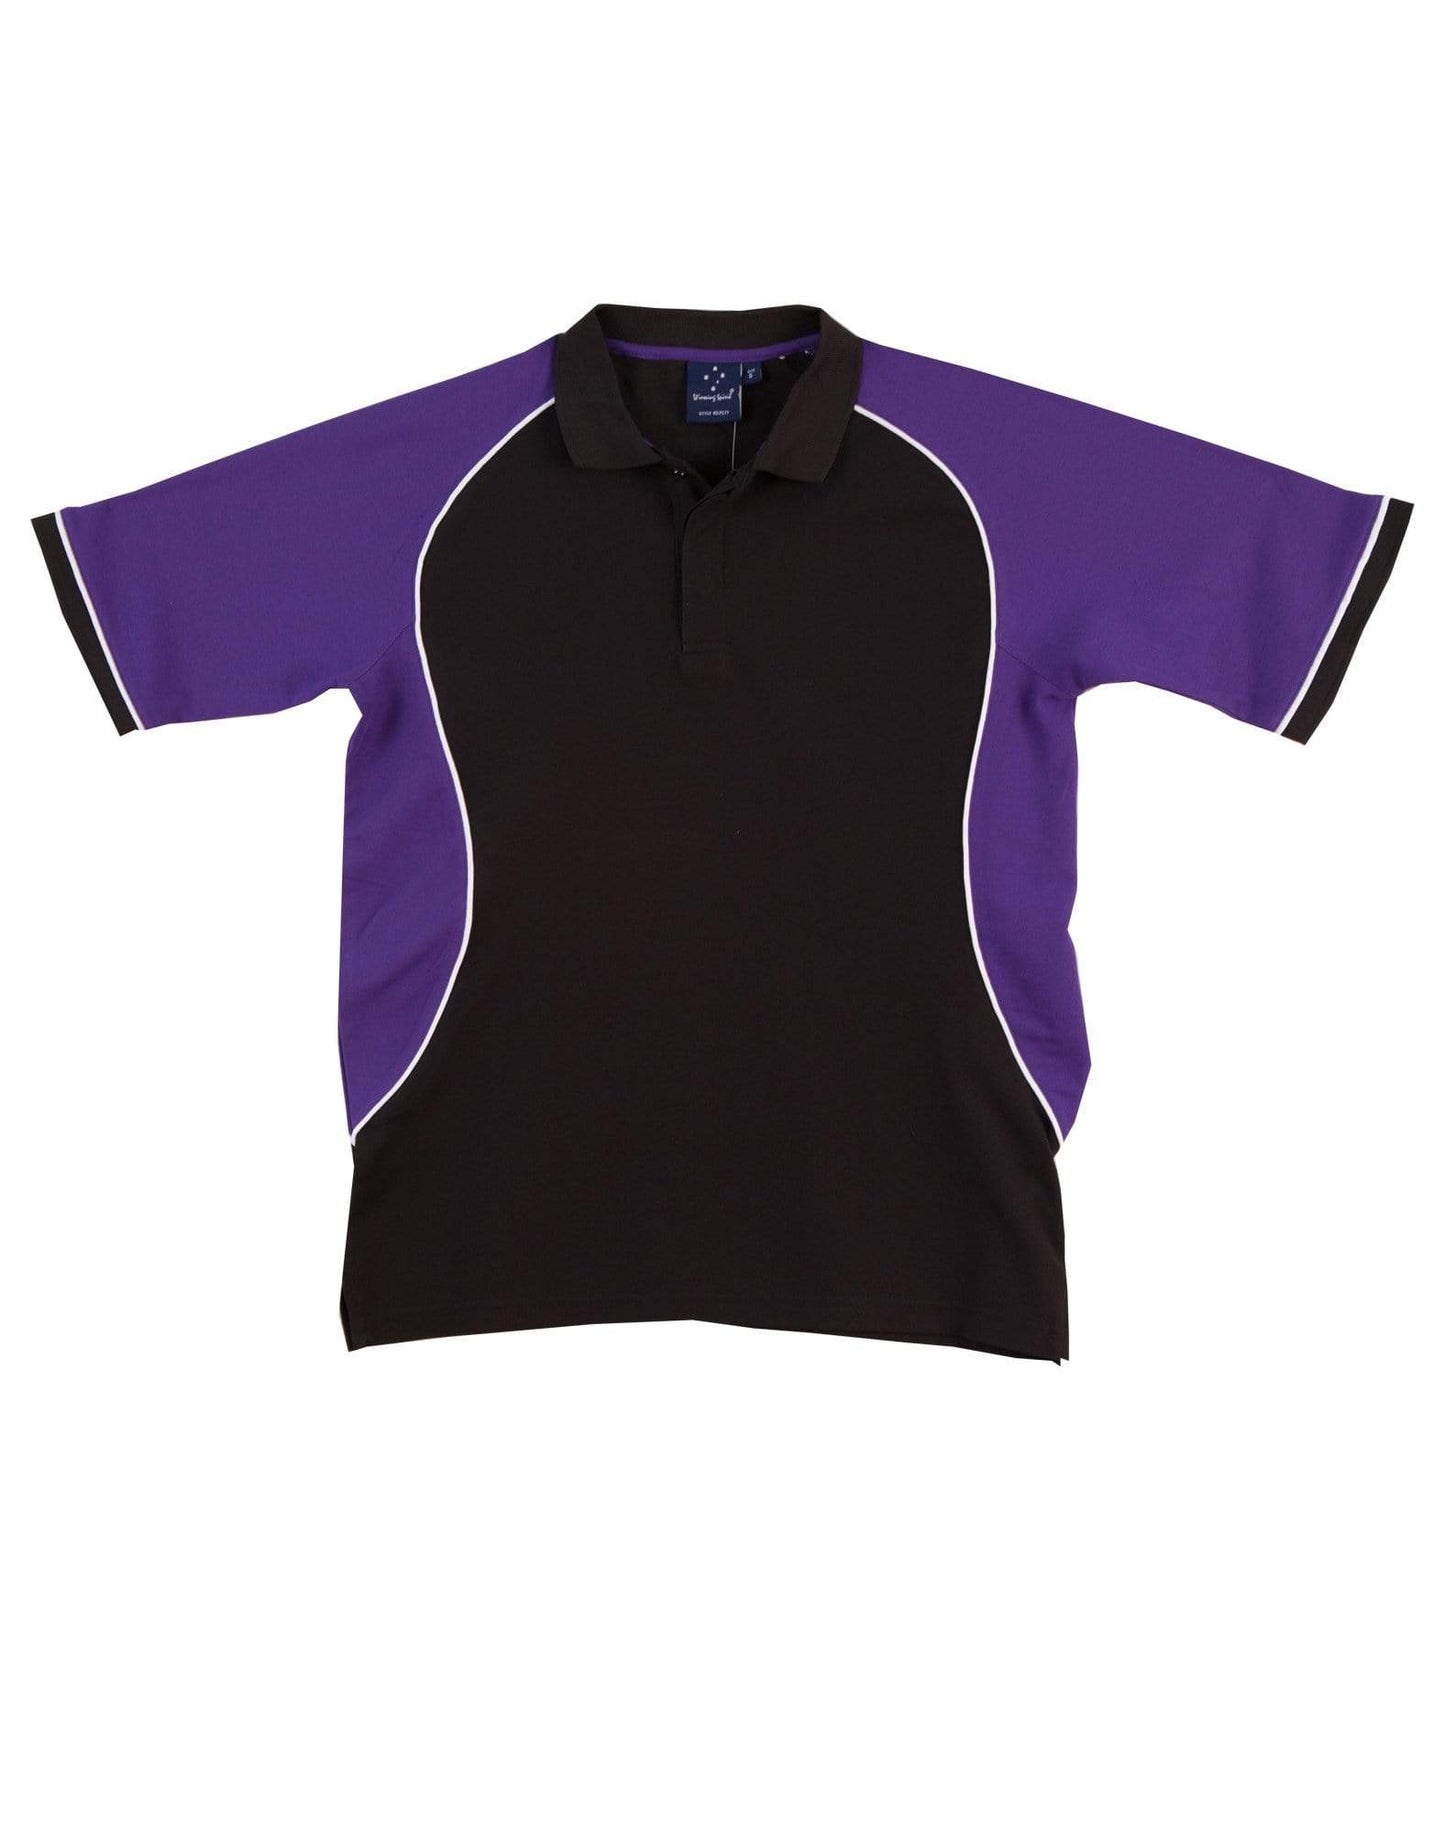 Winning Spirit Arena Polo Shirt  Men's Ps77 Casual Wear Winning Spirit Black/White/Purple S 